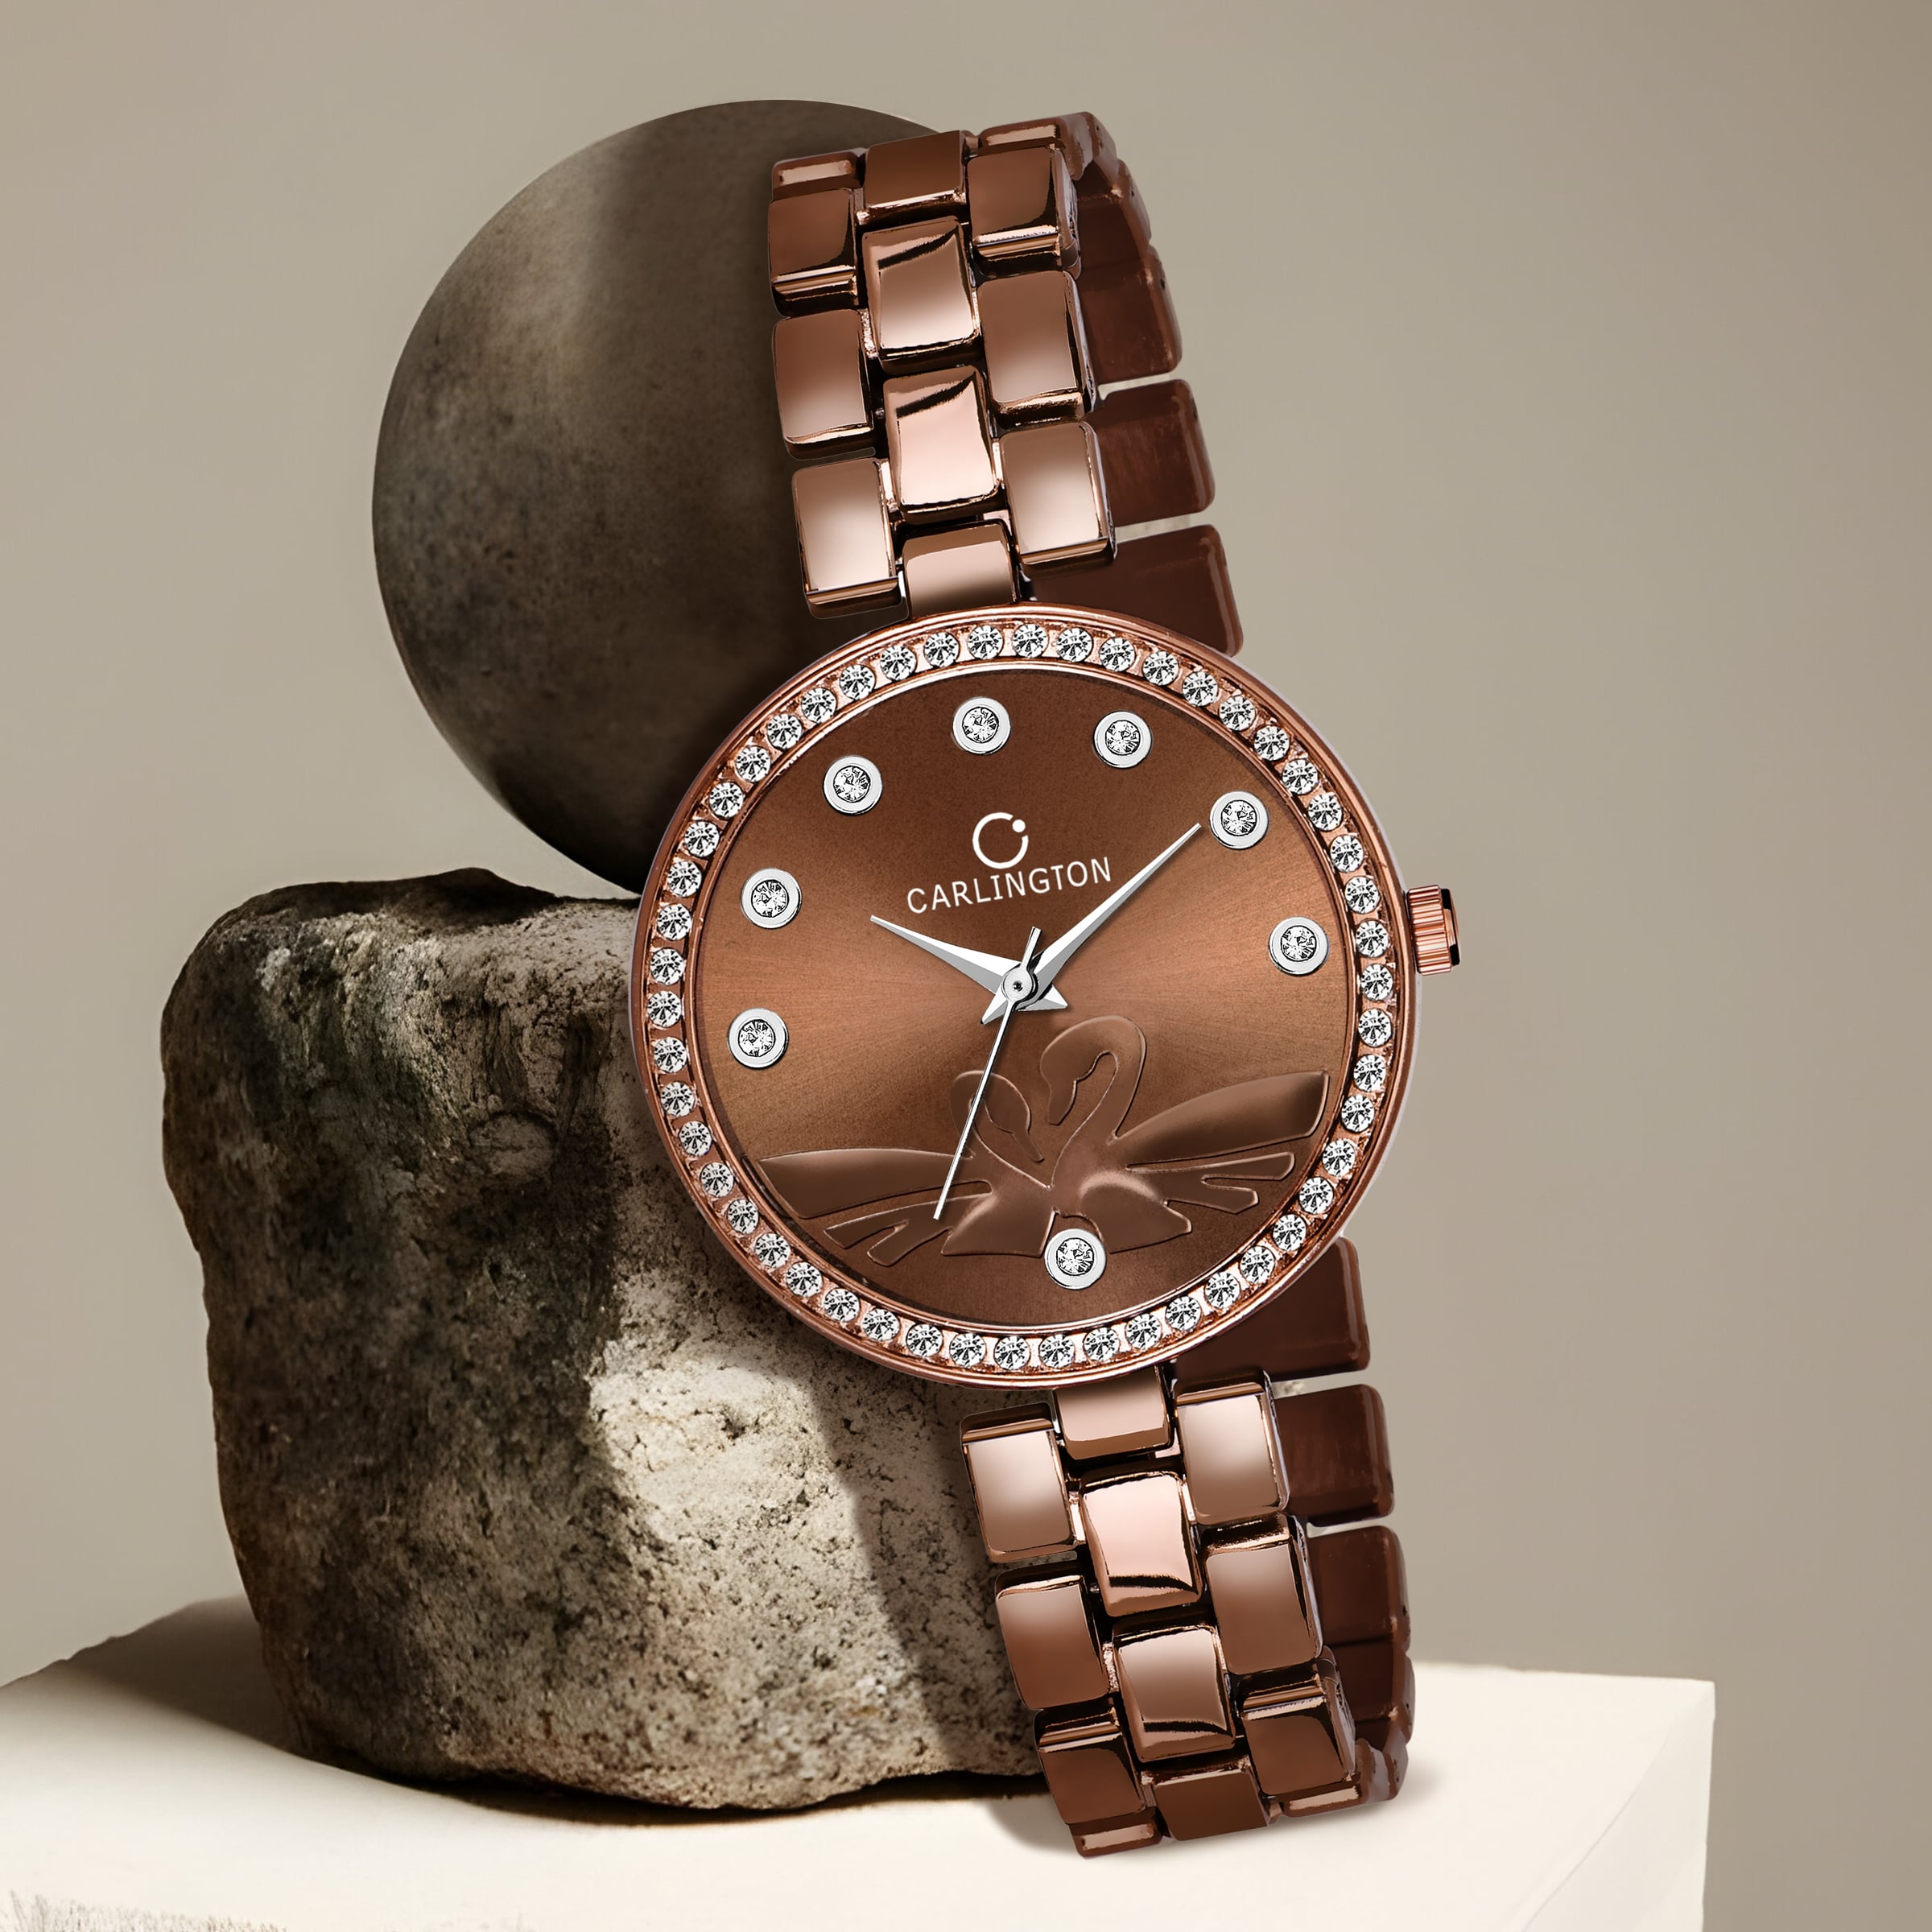 Carlington analog women's watch duck brown